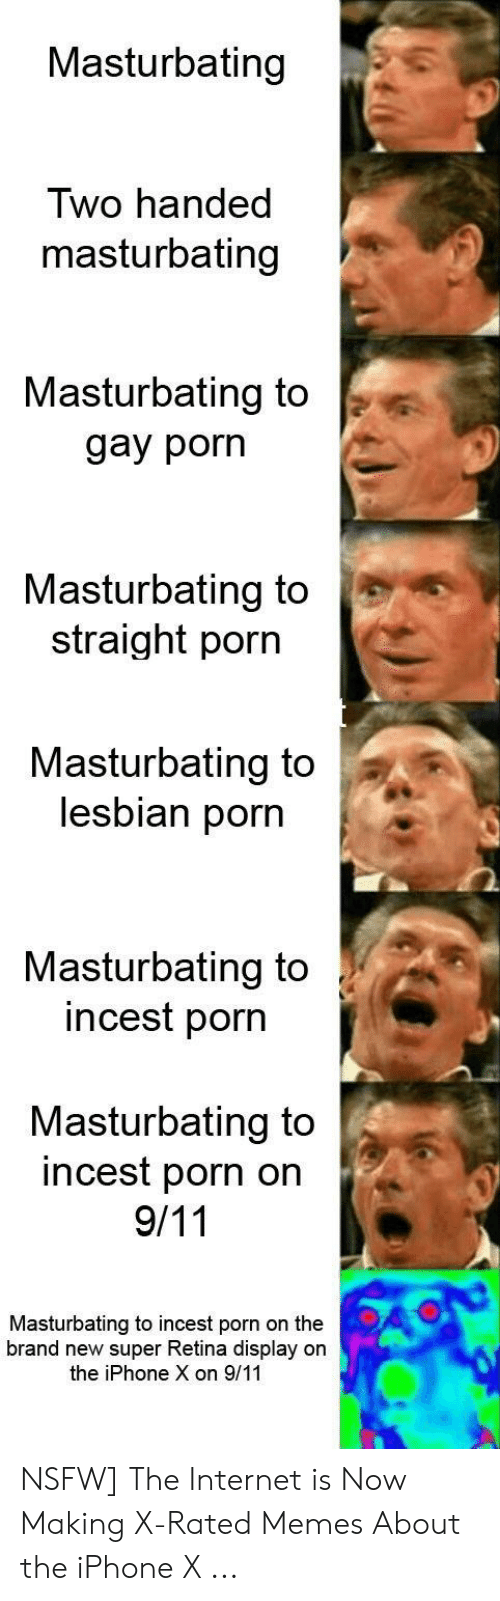 Two handed masturbating